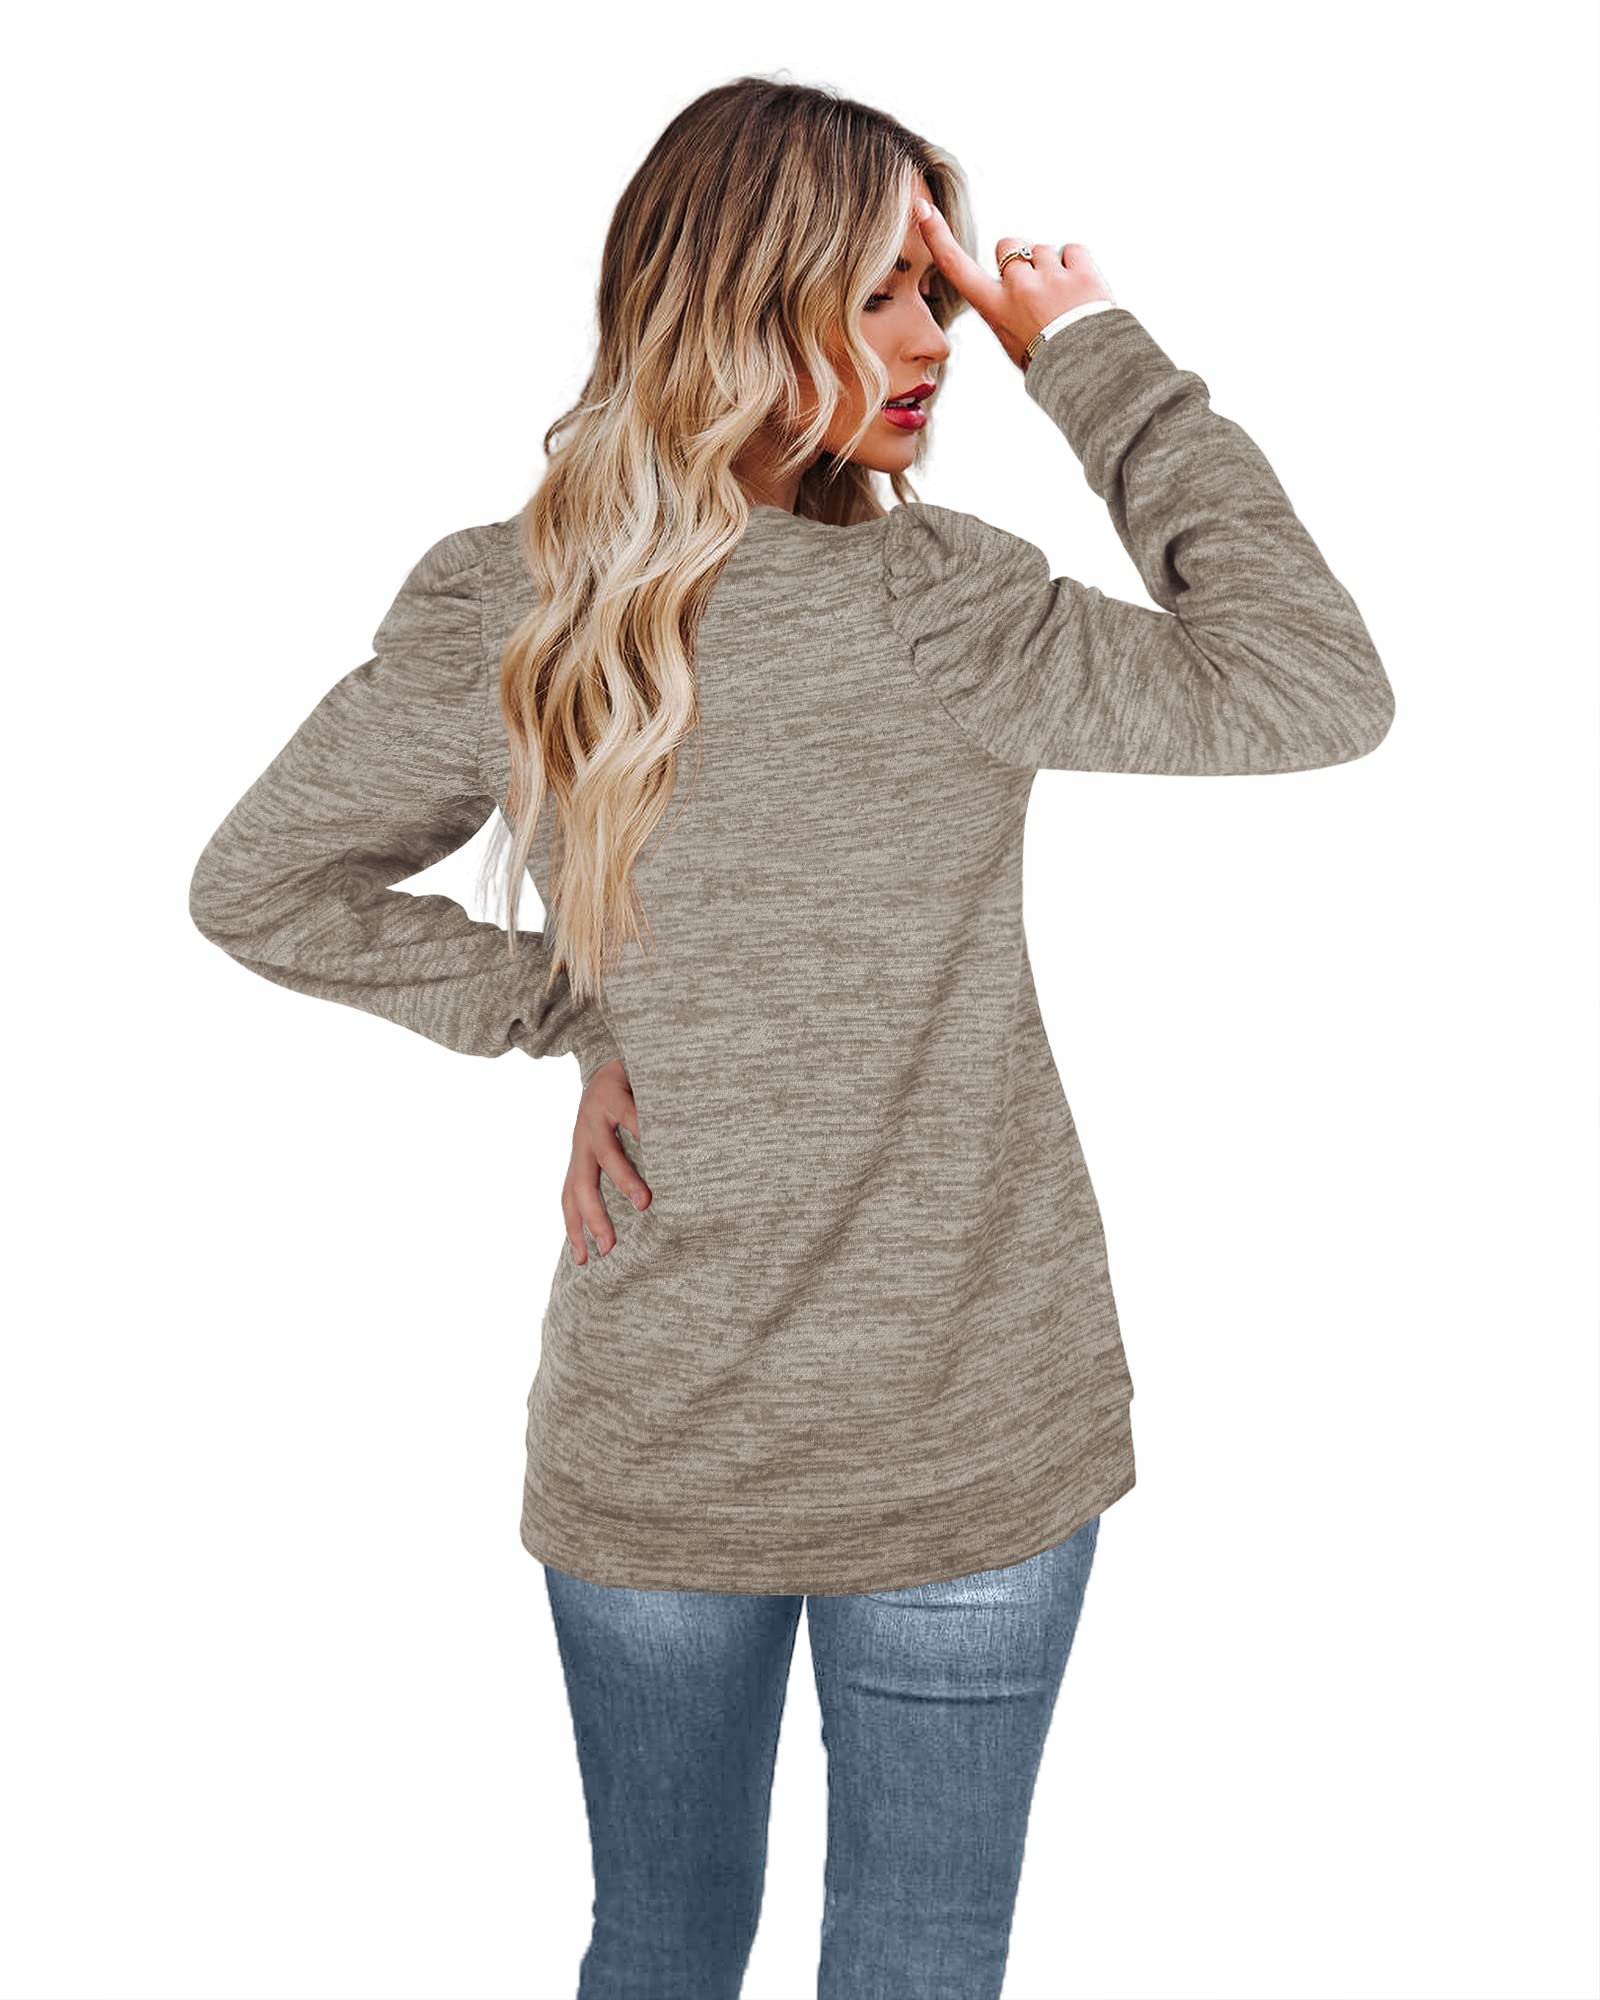 WEESO Crewneck Sweatshirts for Women Fashion Puff Sleeve Tops